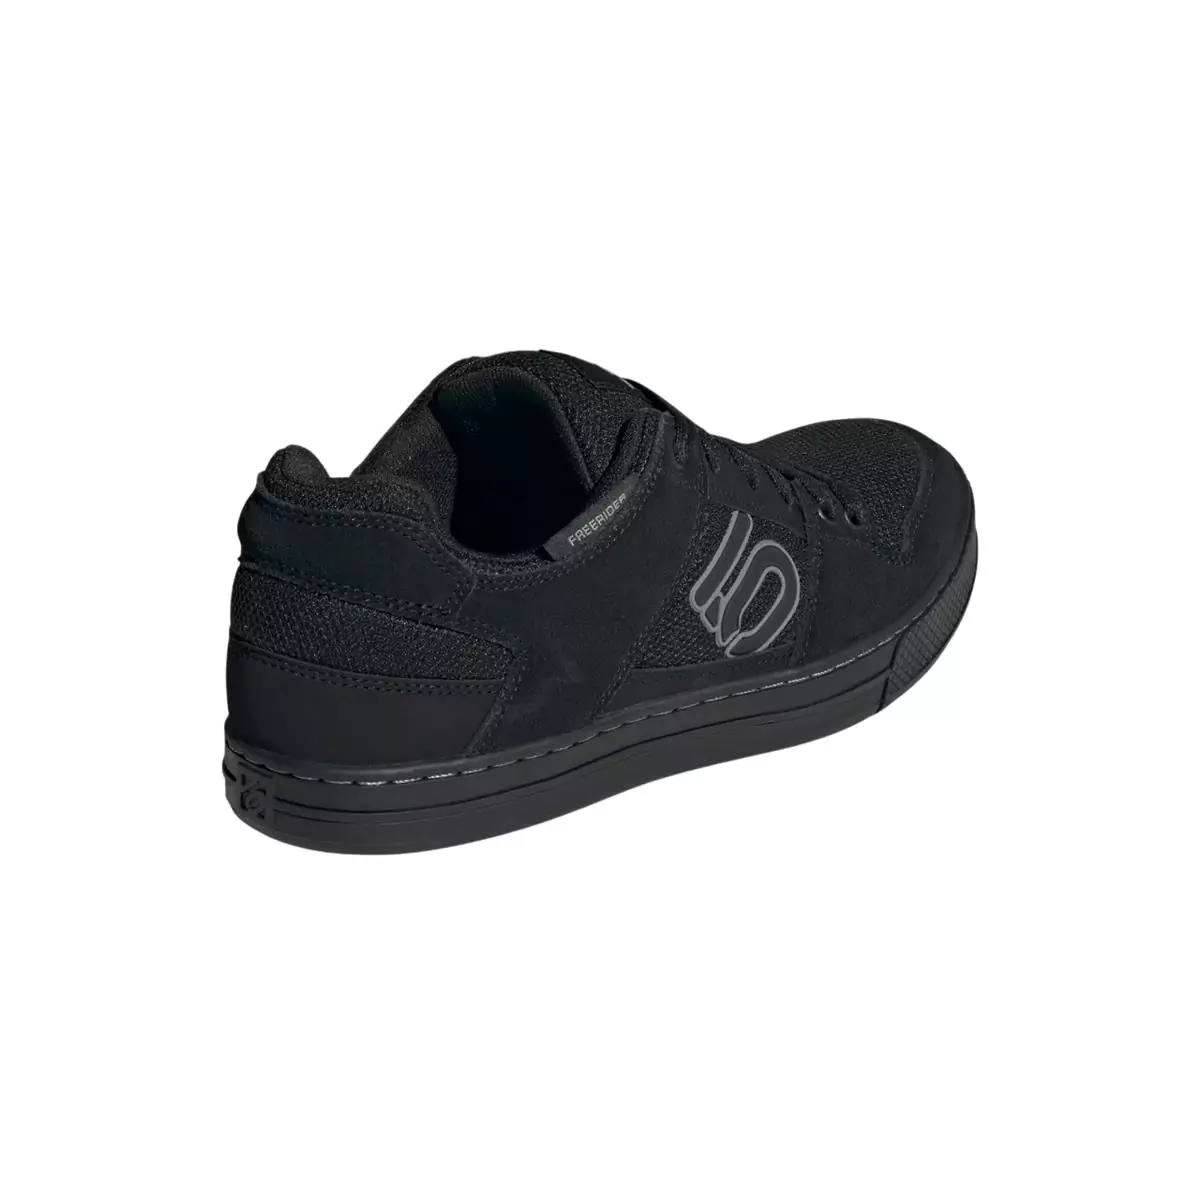 MTB Shoes Flat Freerider Black Size 43 #5